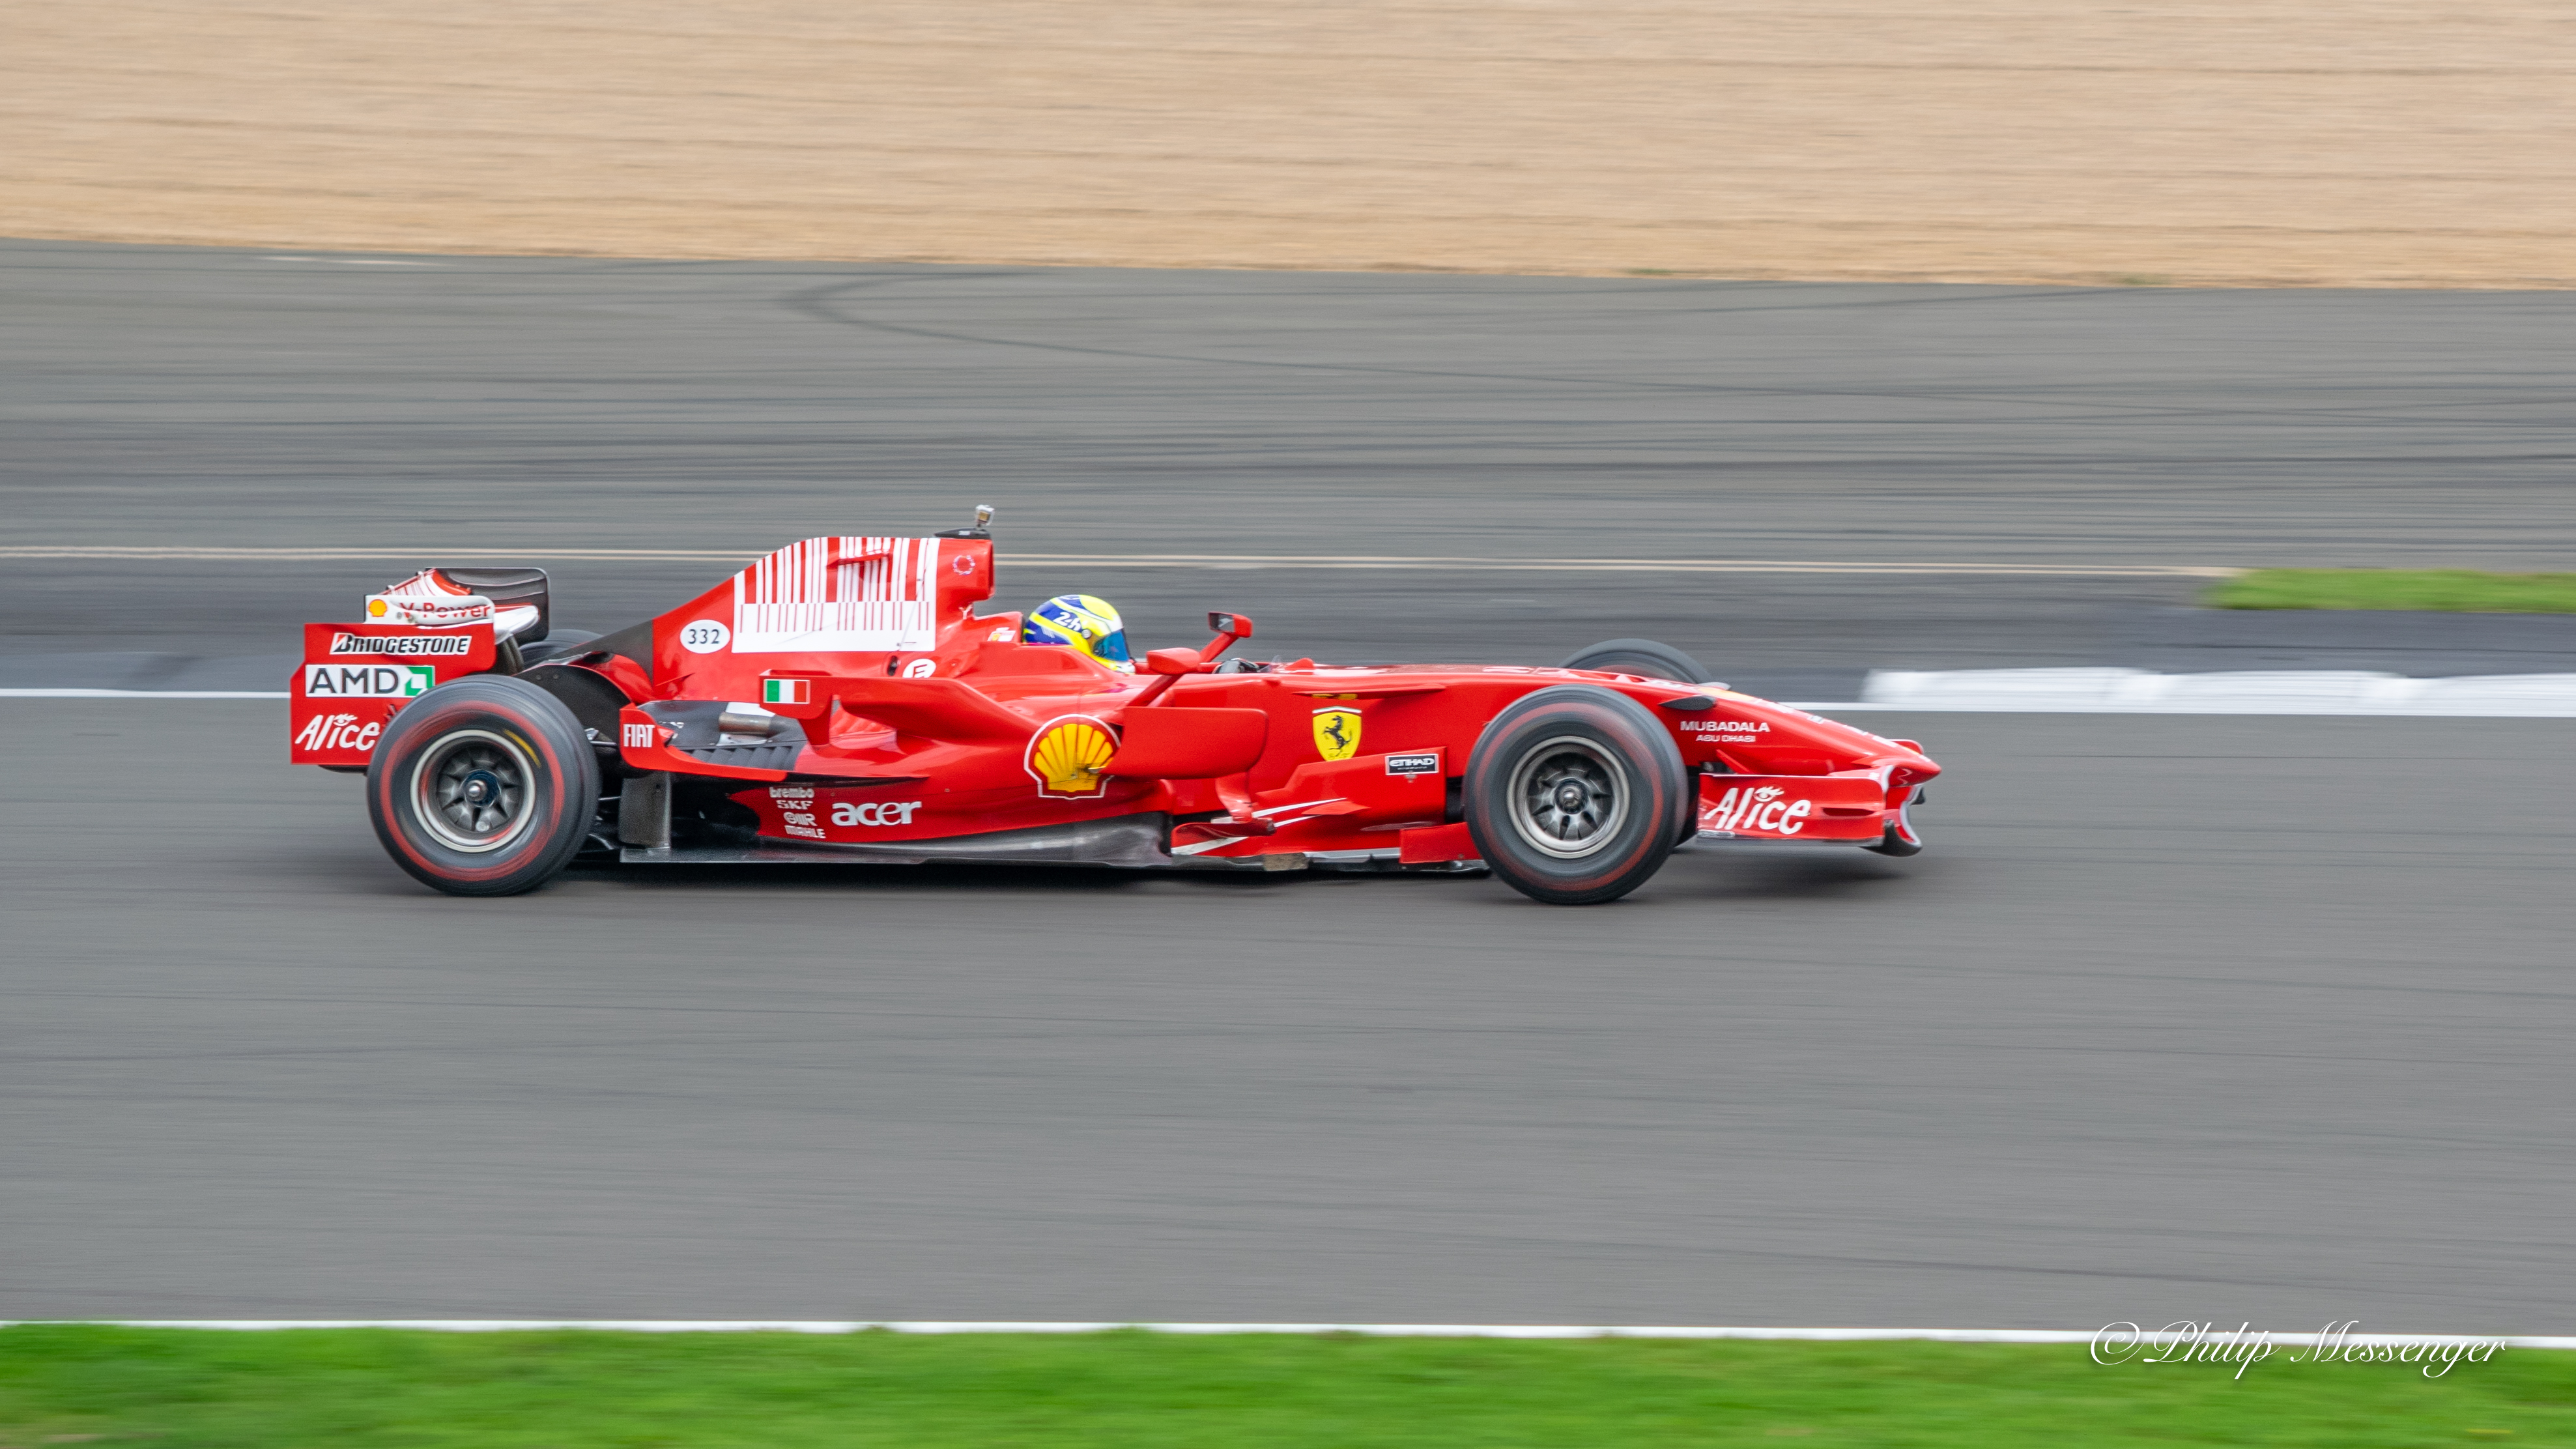 2007 Ferrari formula one car at Silverstone 